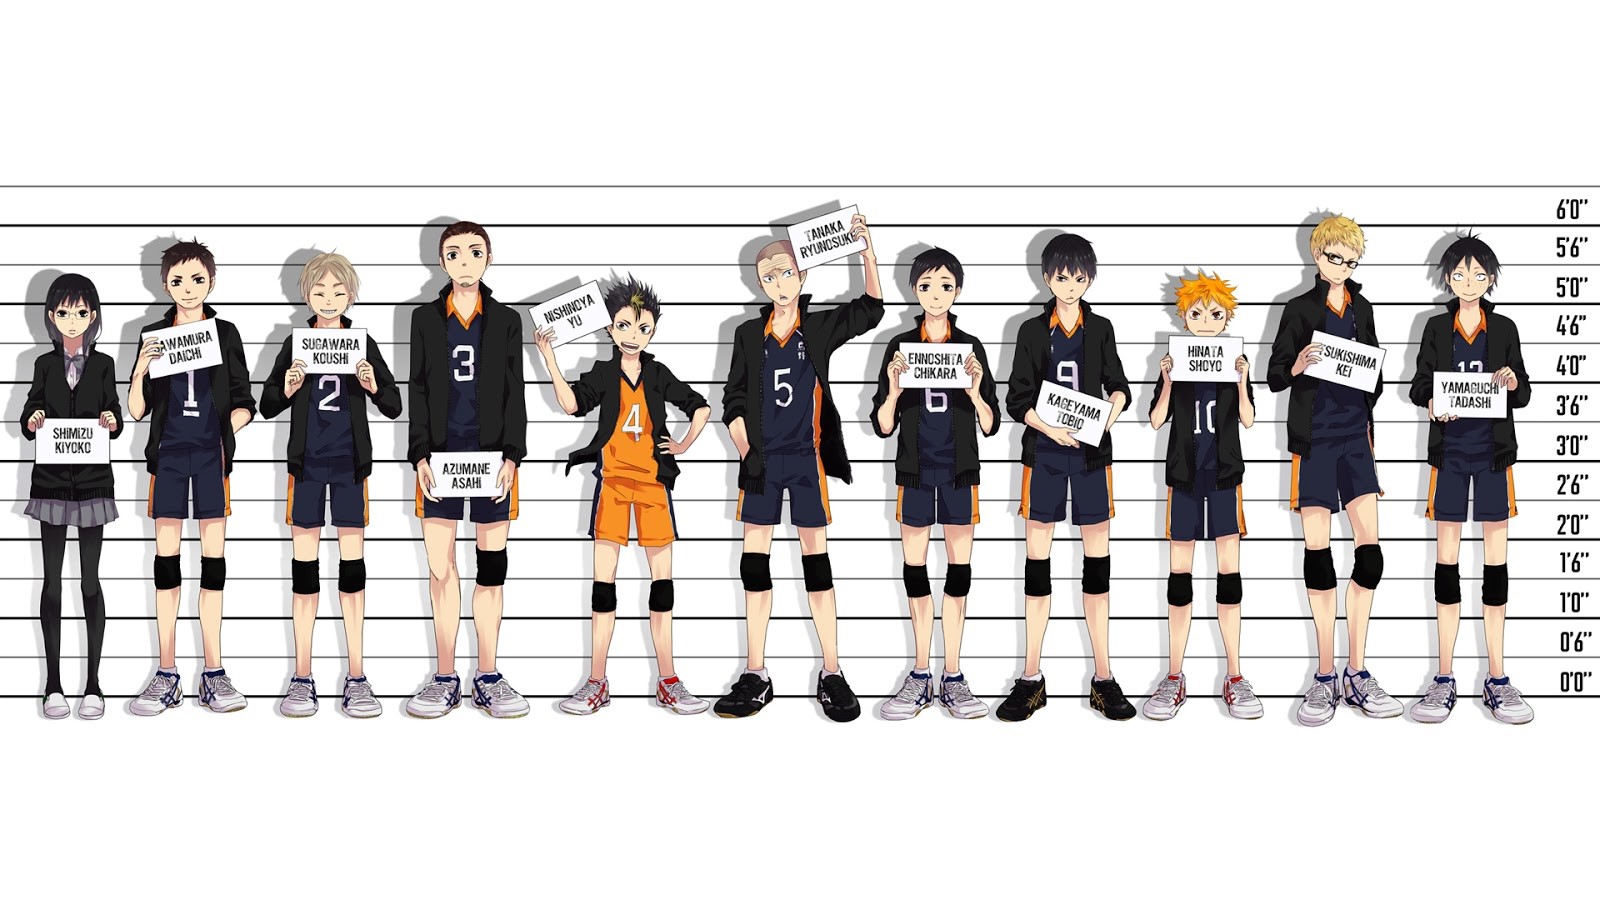 HD wallpaper: hinata shouyo, haikyuu, volleyball, anime, group of people